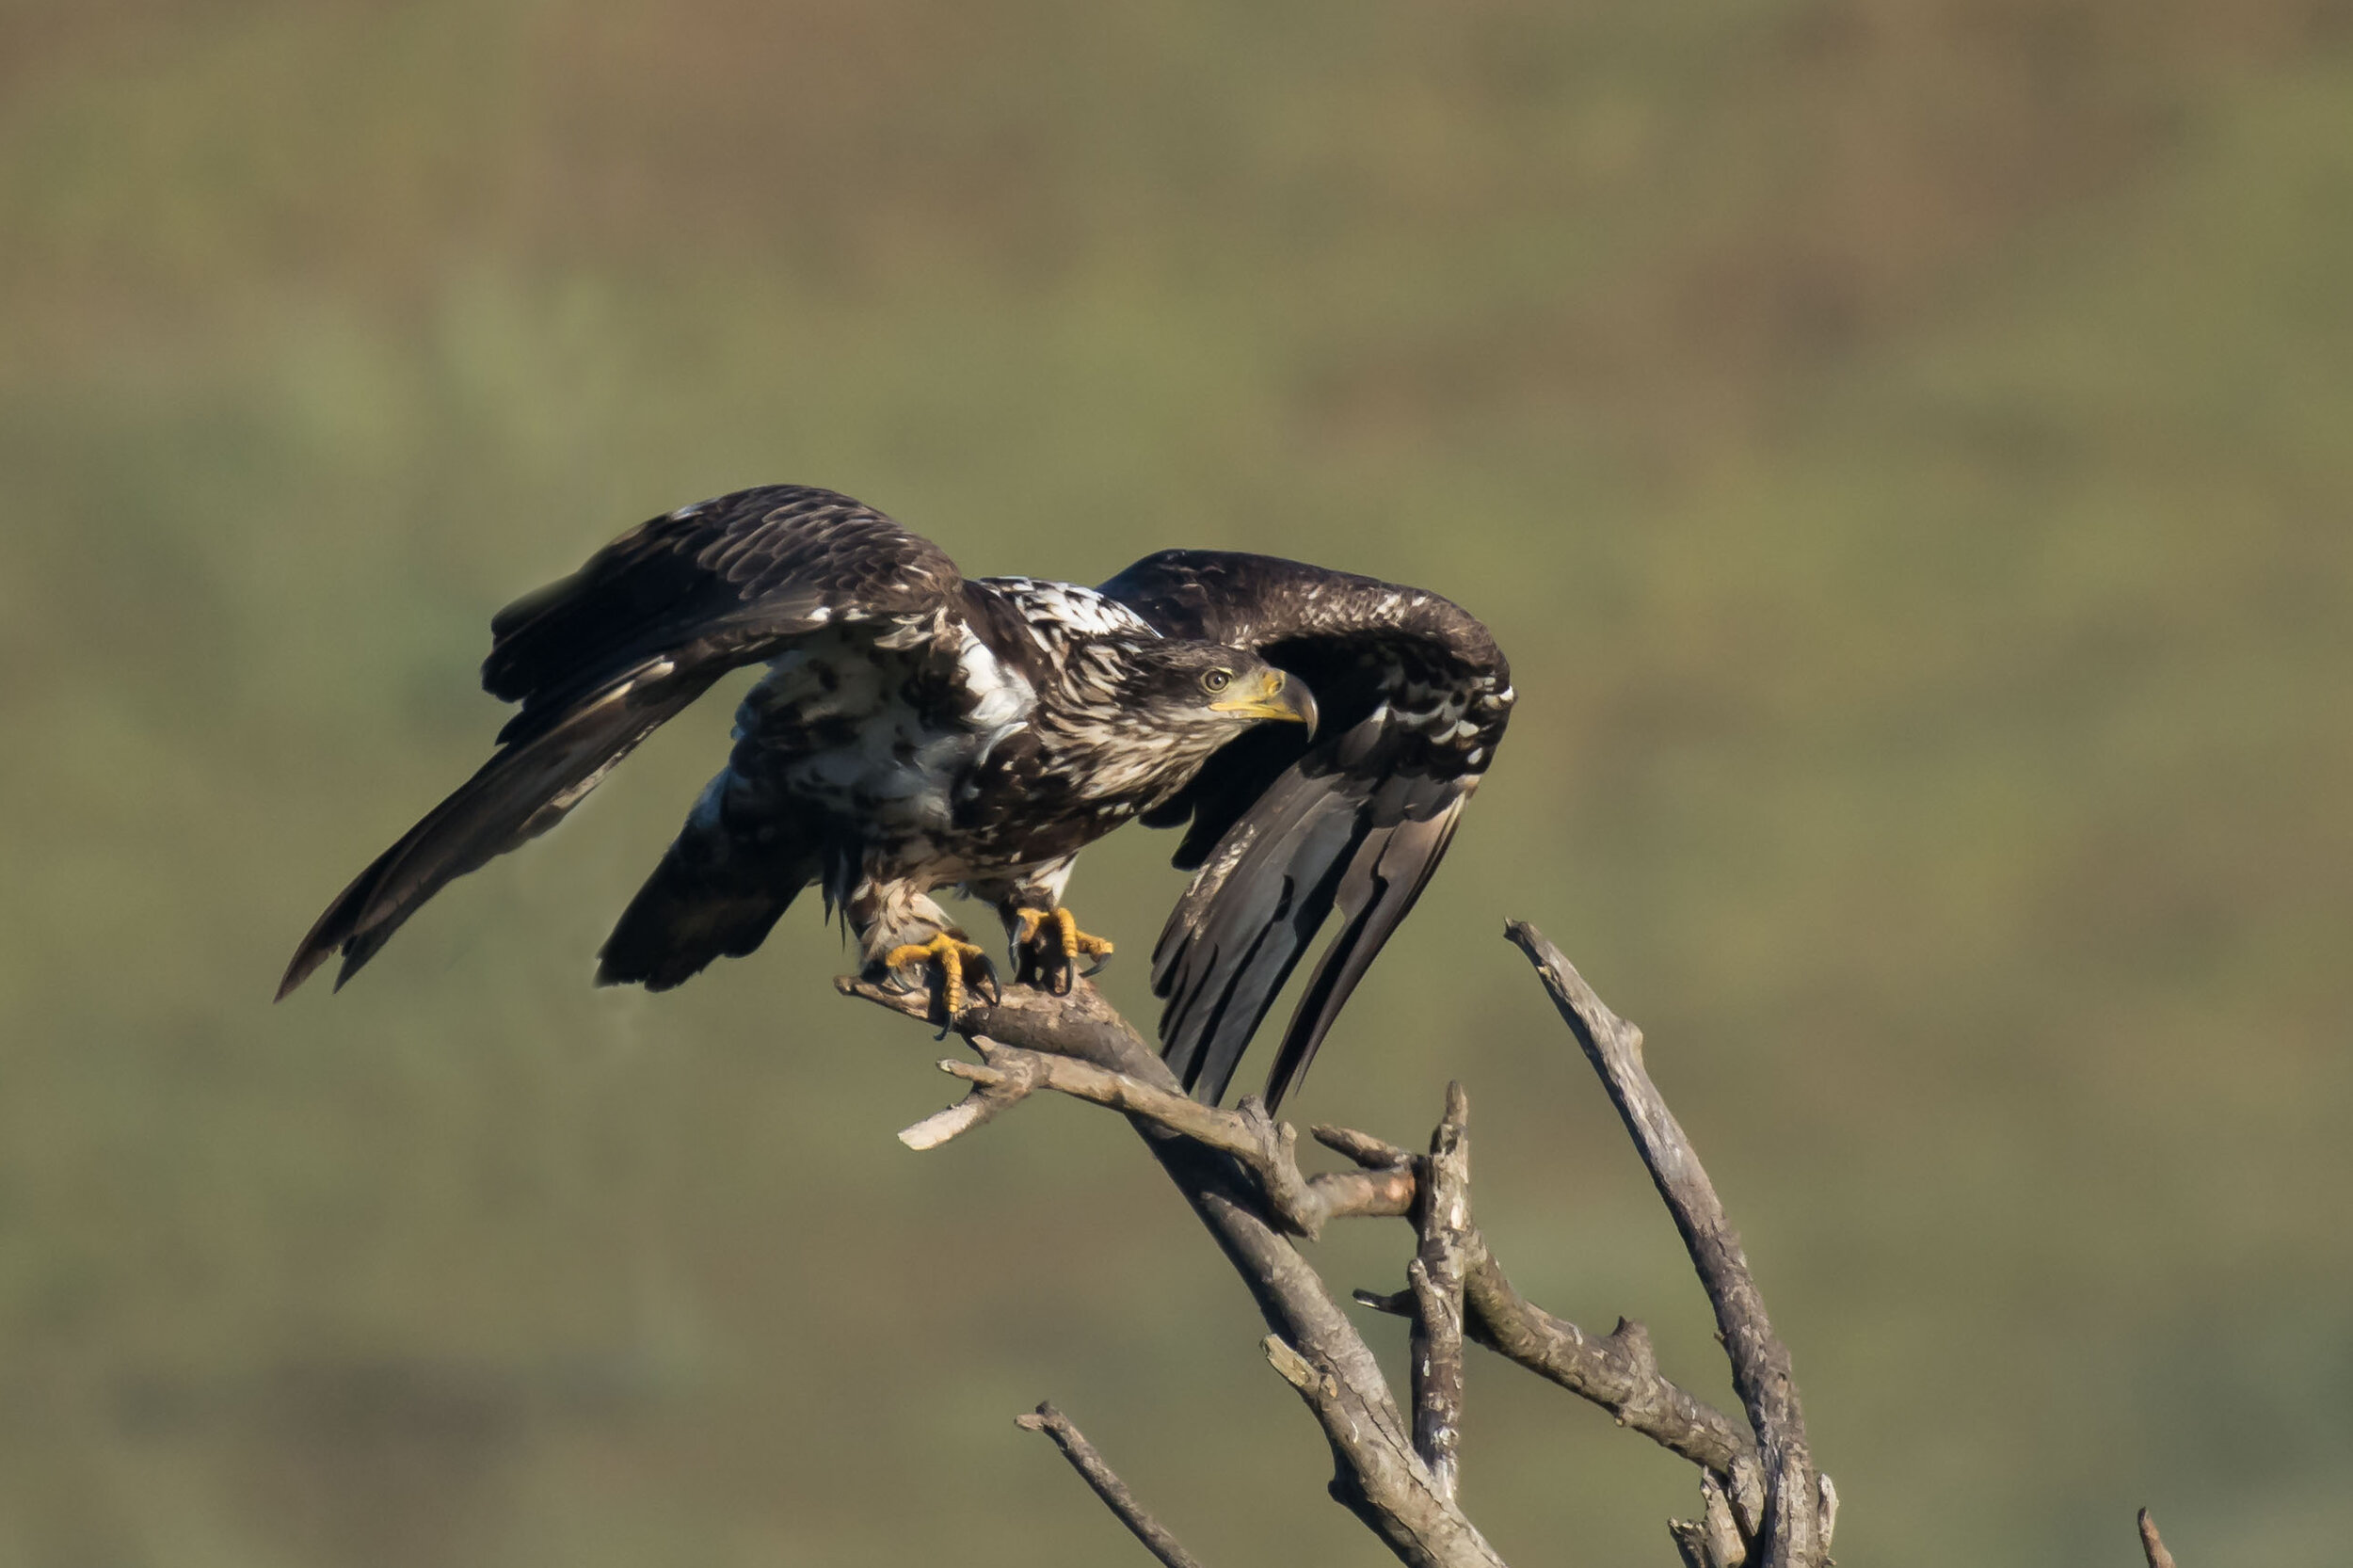 Juvenile Bald Eagle, Willow Creek, Russian River